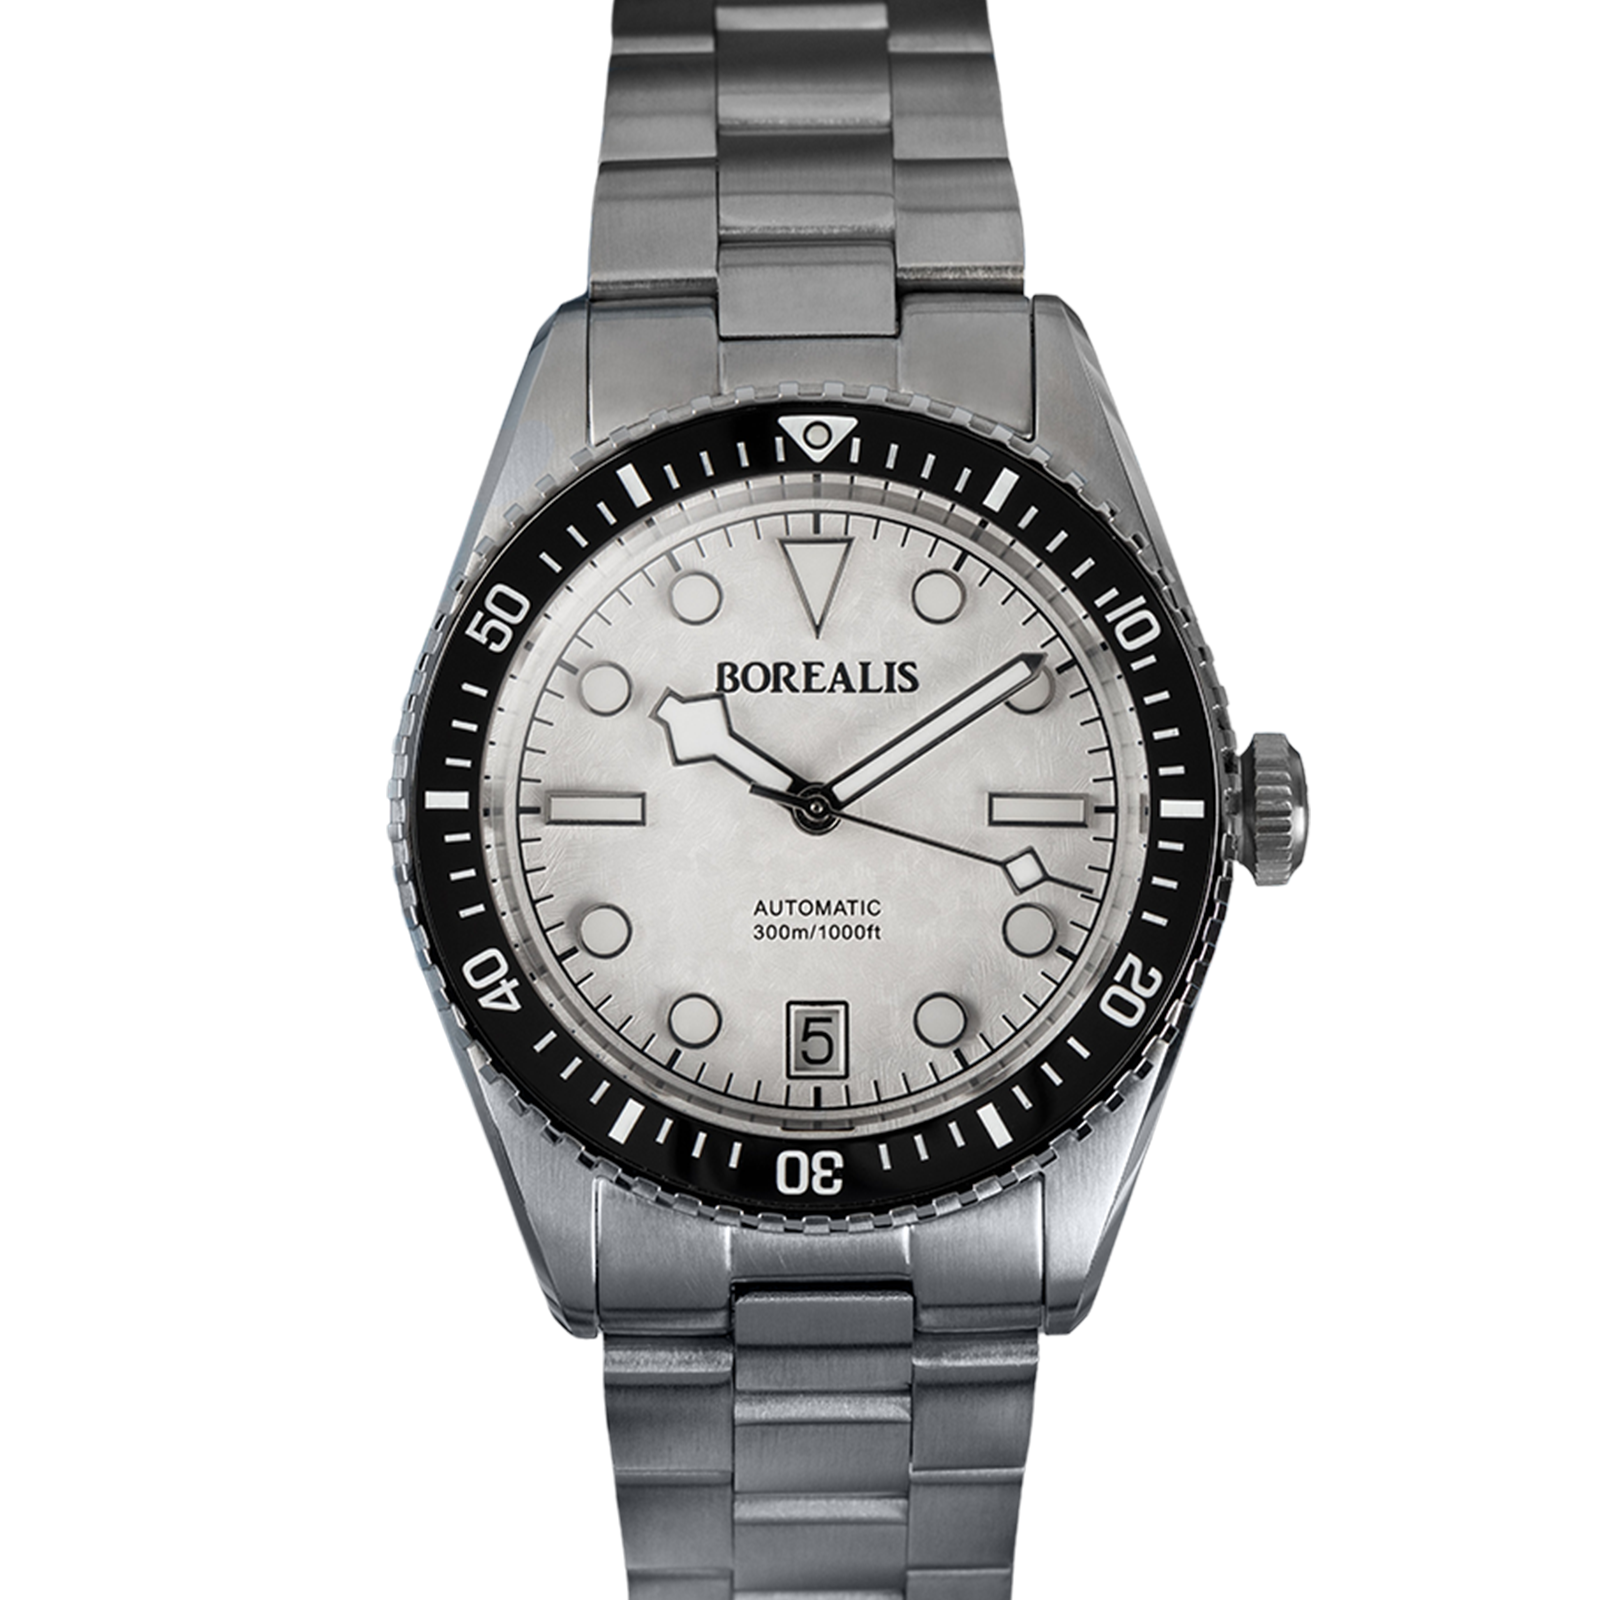 Products - Borealis Watch Company